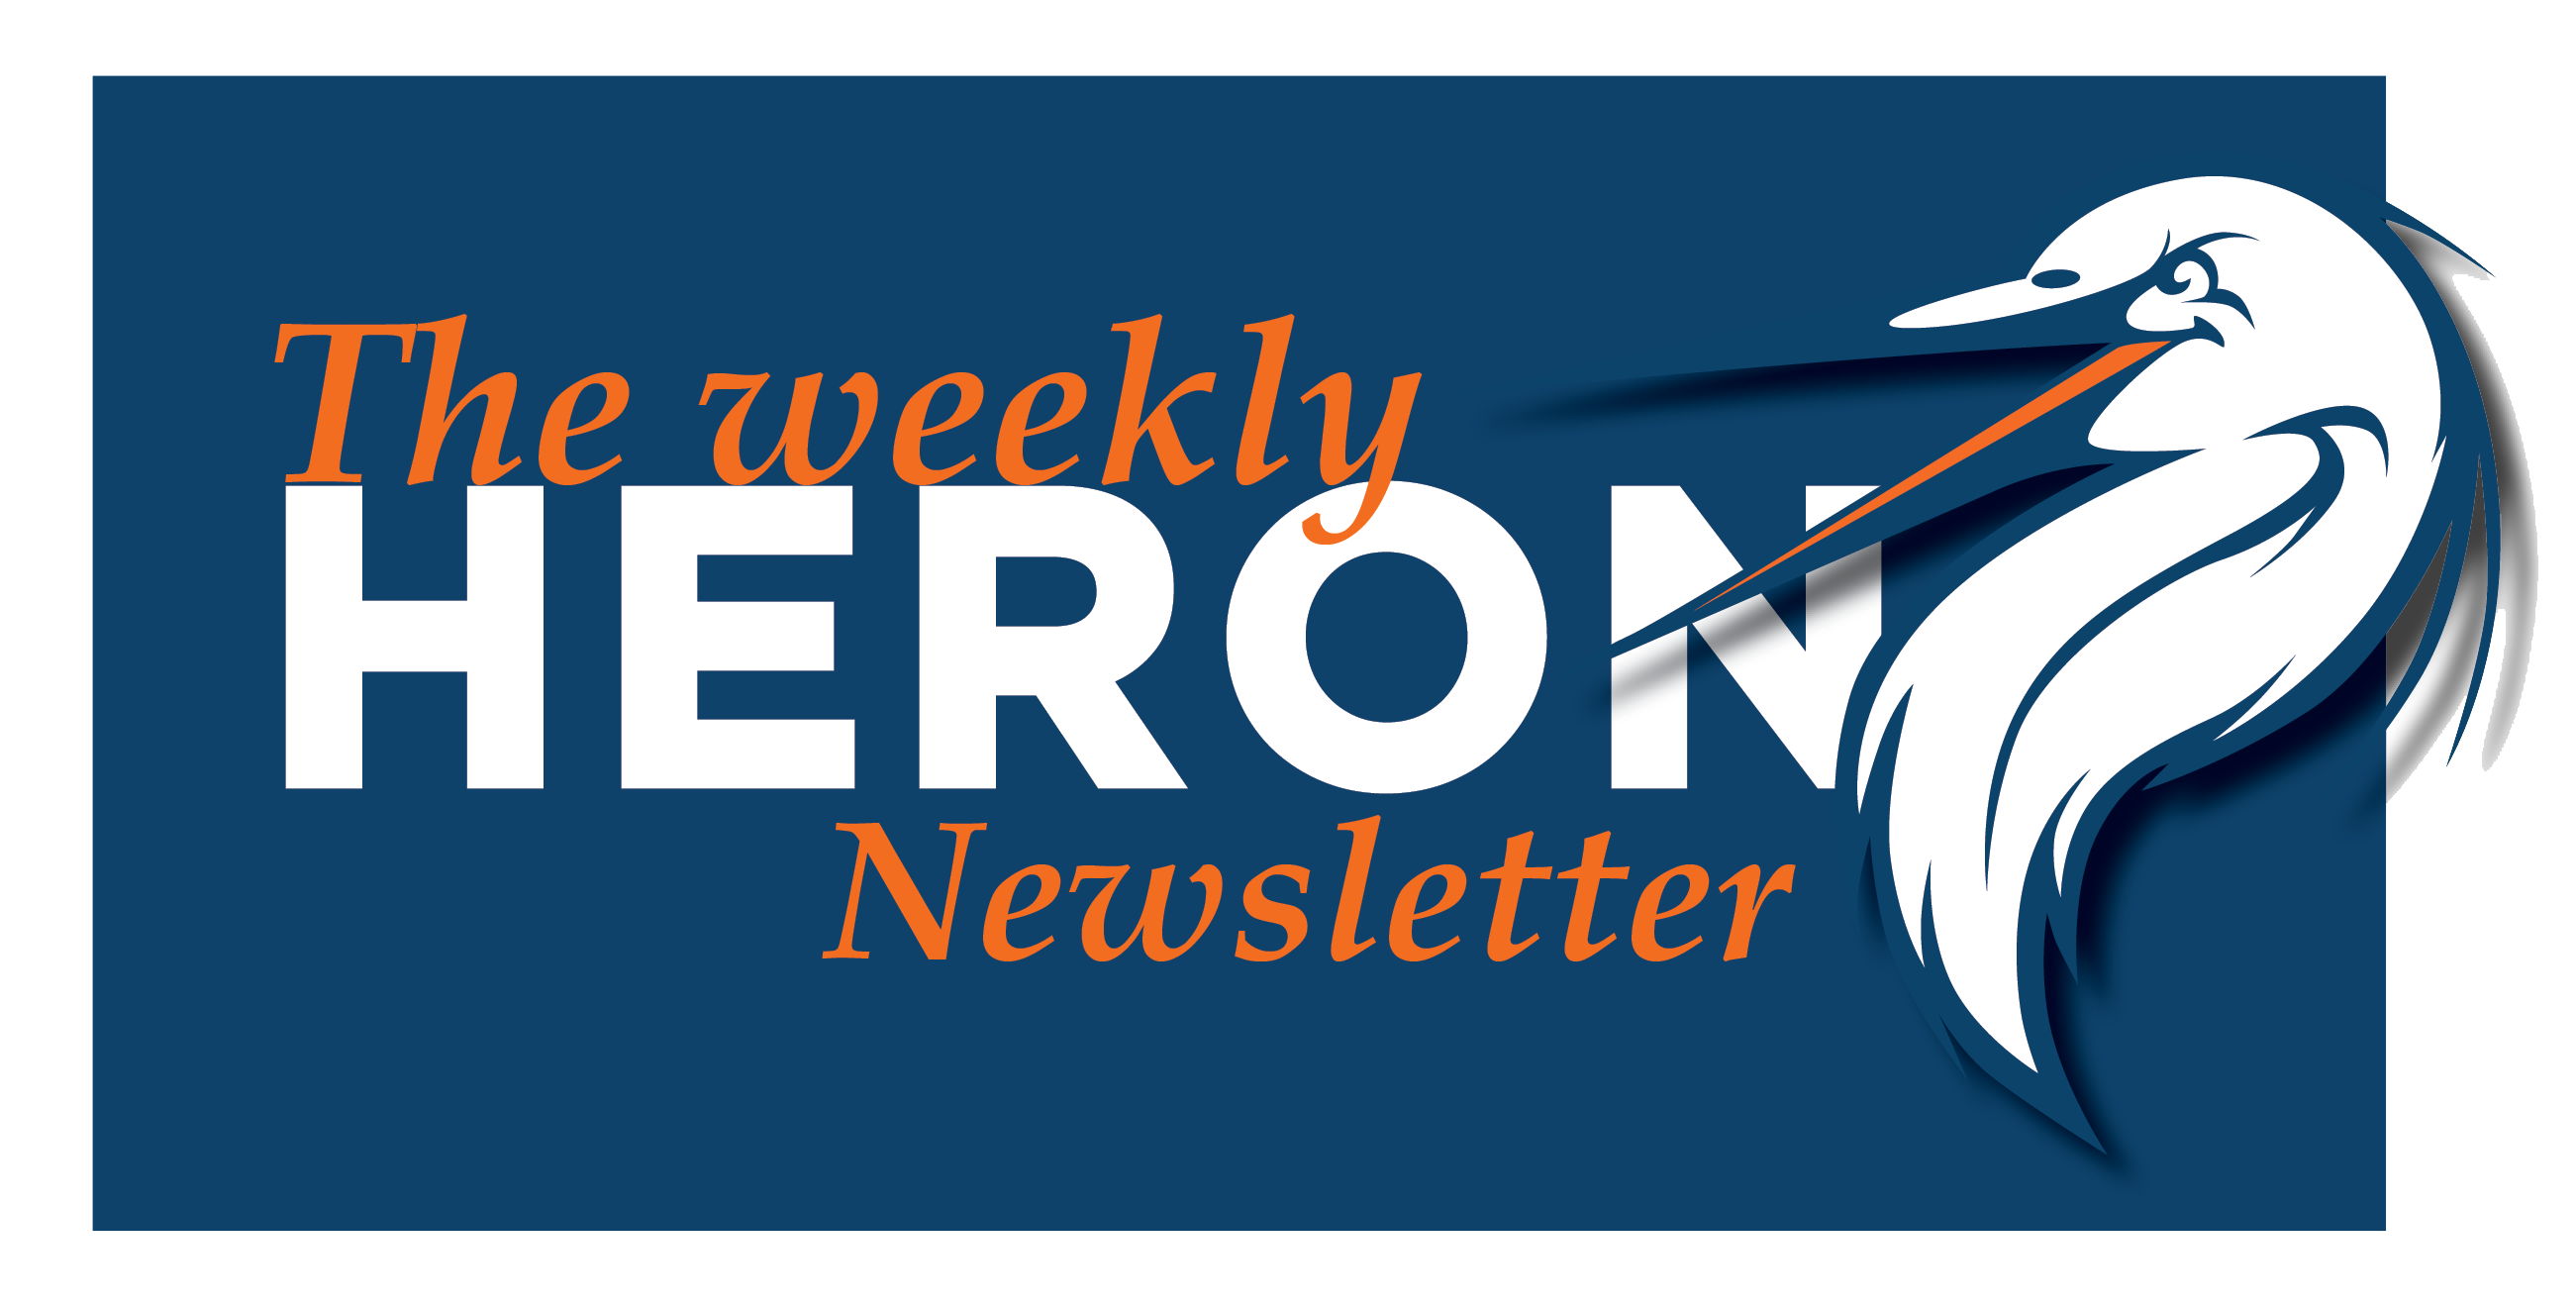 The Weekly Heron Newsletter